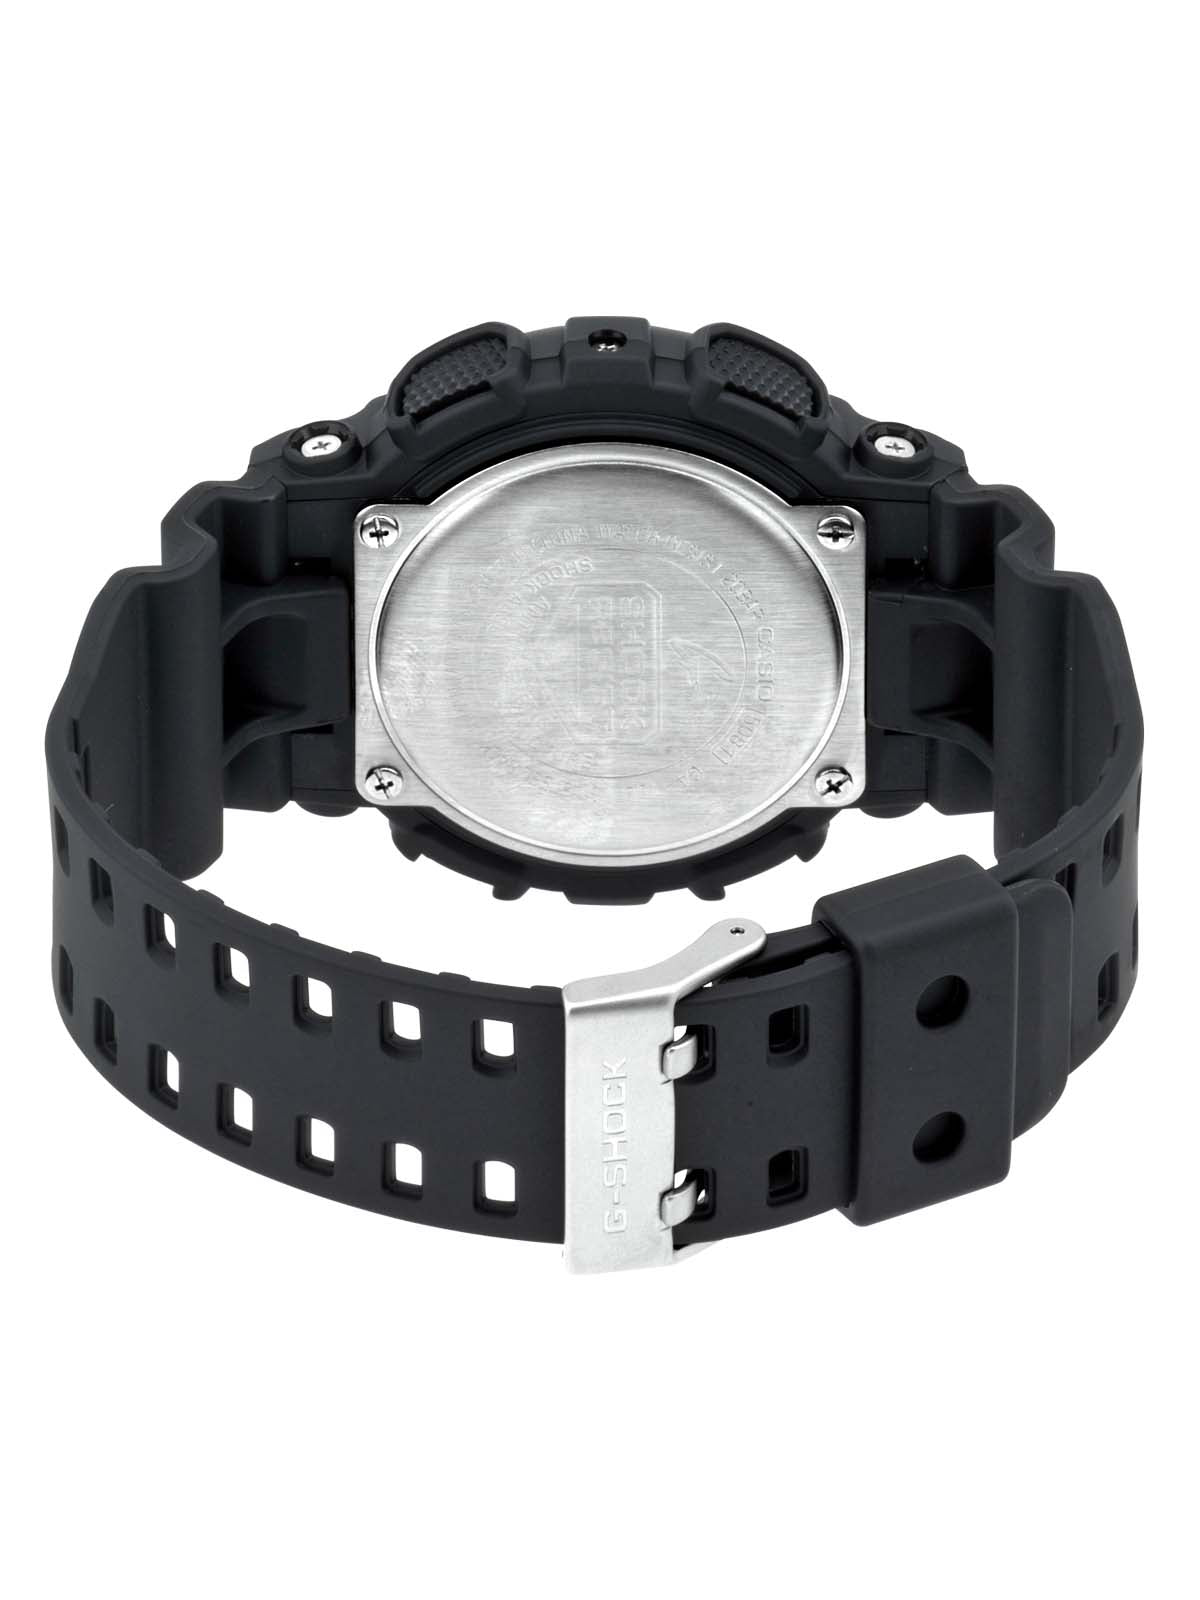 Casio watch G-Shock Classic collection - GA-100-1A1ER